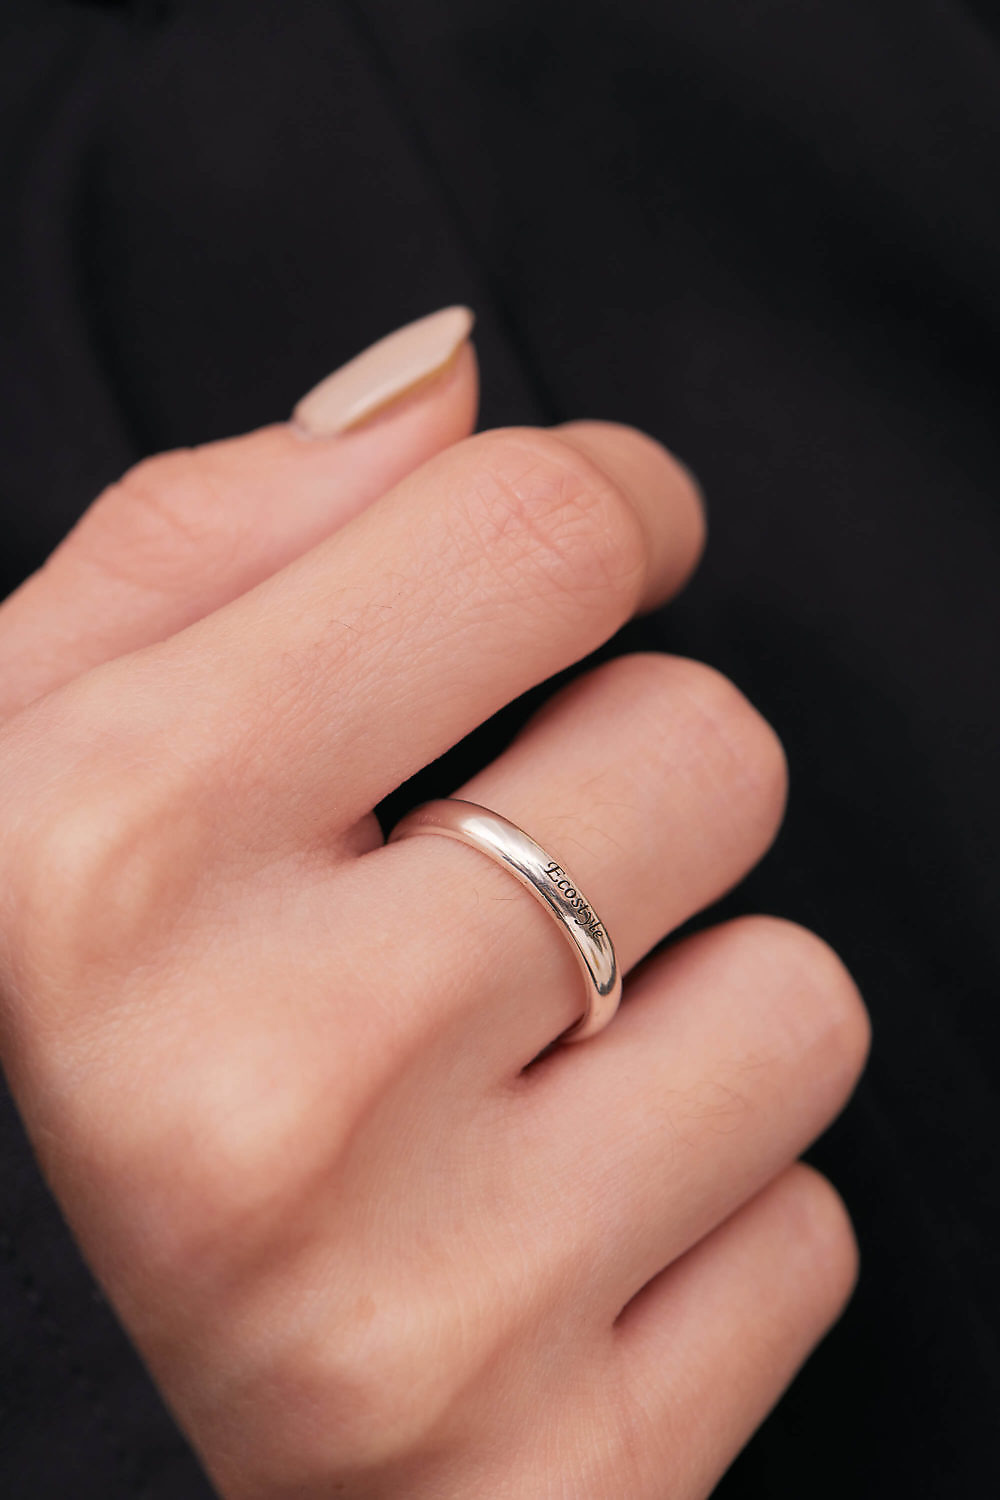 Eco安珂,韓國飾品,韓國戒指,韓國925純銀戒指,韓國純銀戒指,925純銀戒指,純銀戒指,開口戒,姓名戒指,客製化戒指